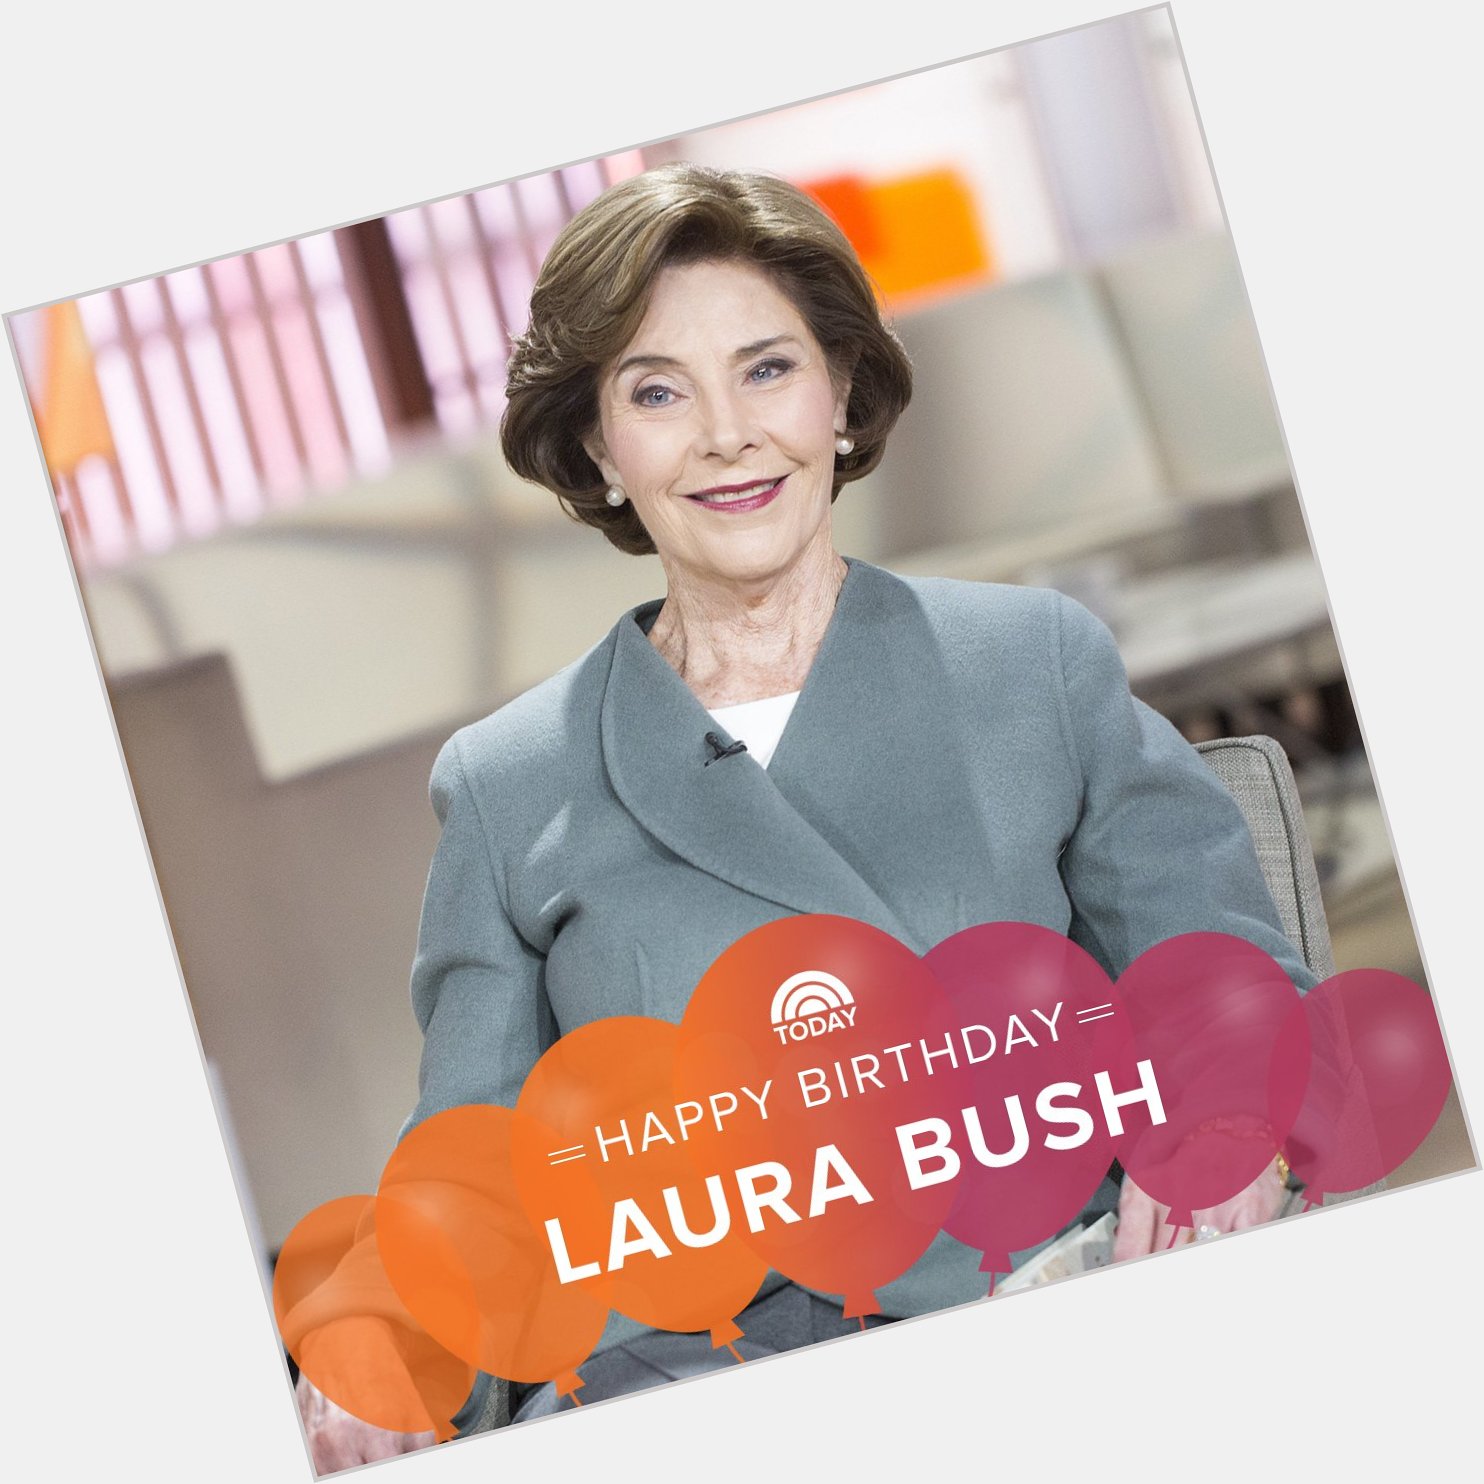 Happy birthday, Laura Bush!  